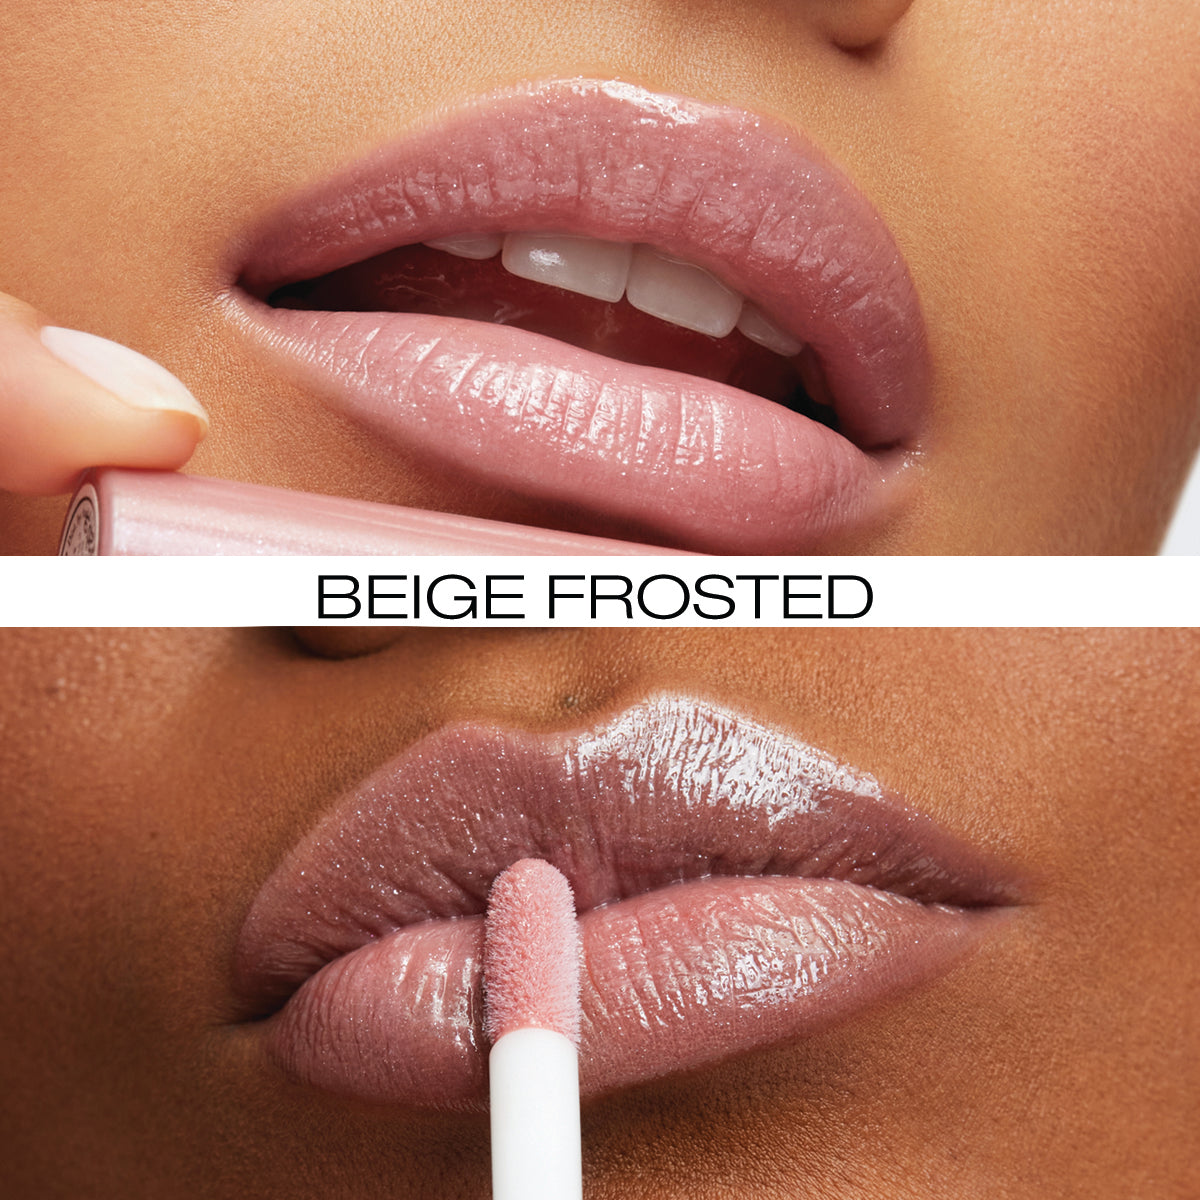 Beige frosted mini lip gloss applied to model's lips